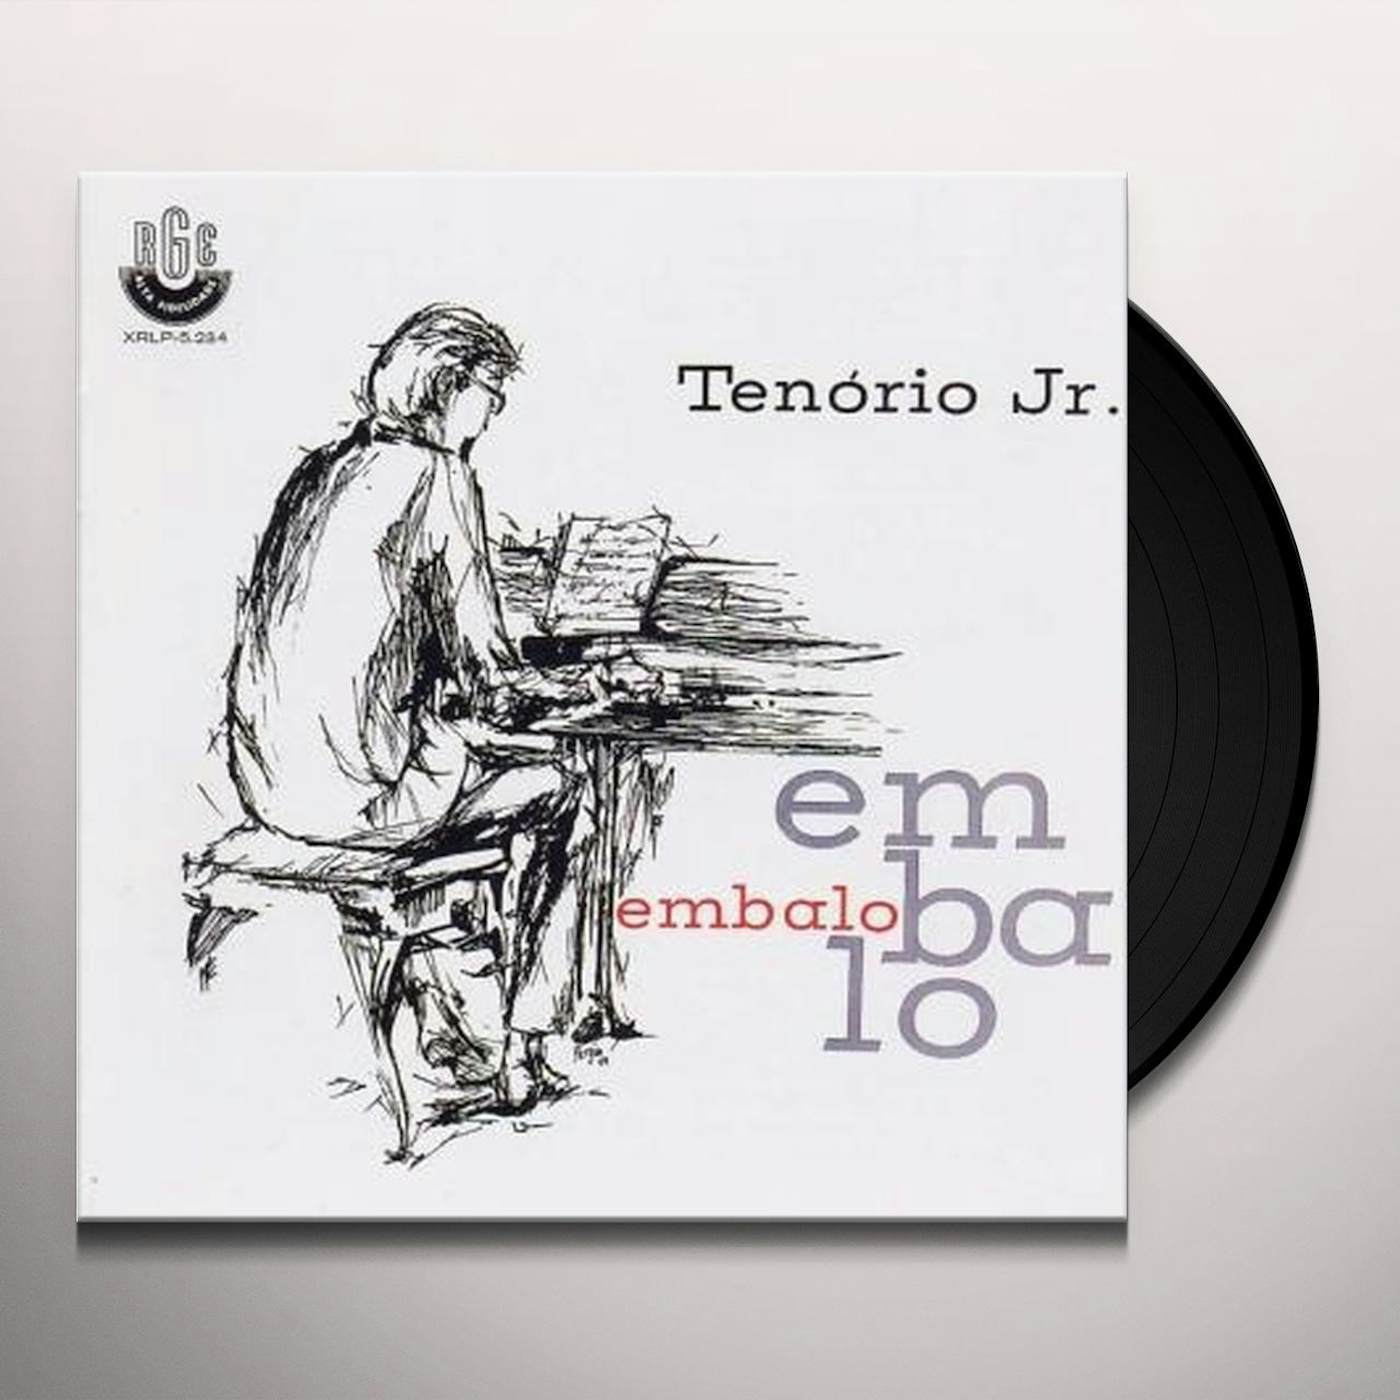 Tenorio Jr. Embalo Vinyl Record